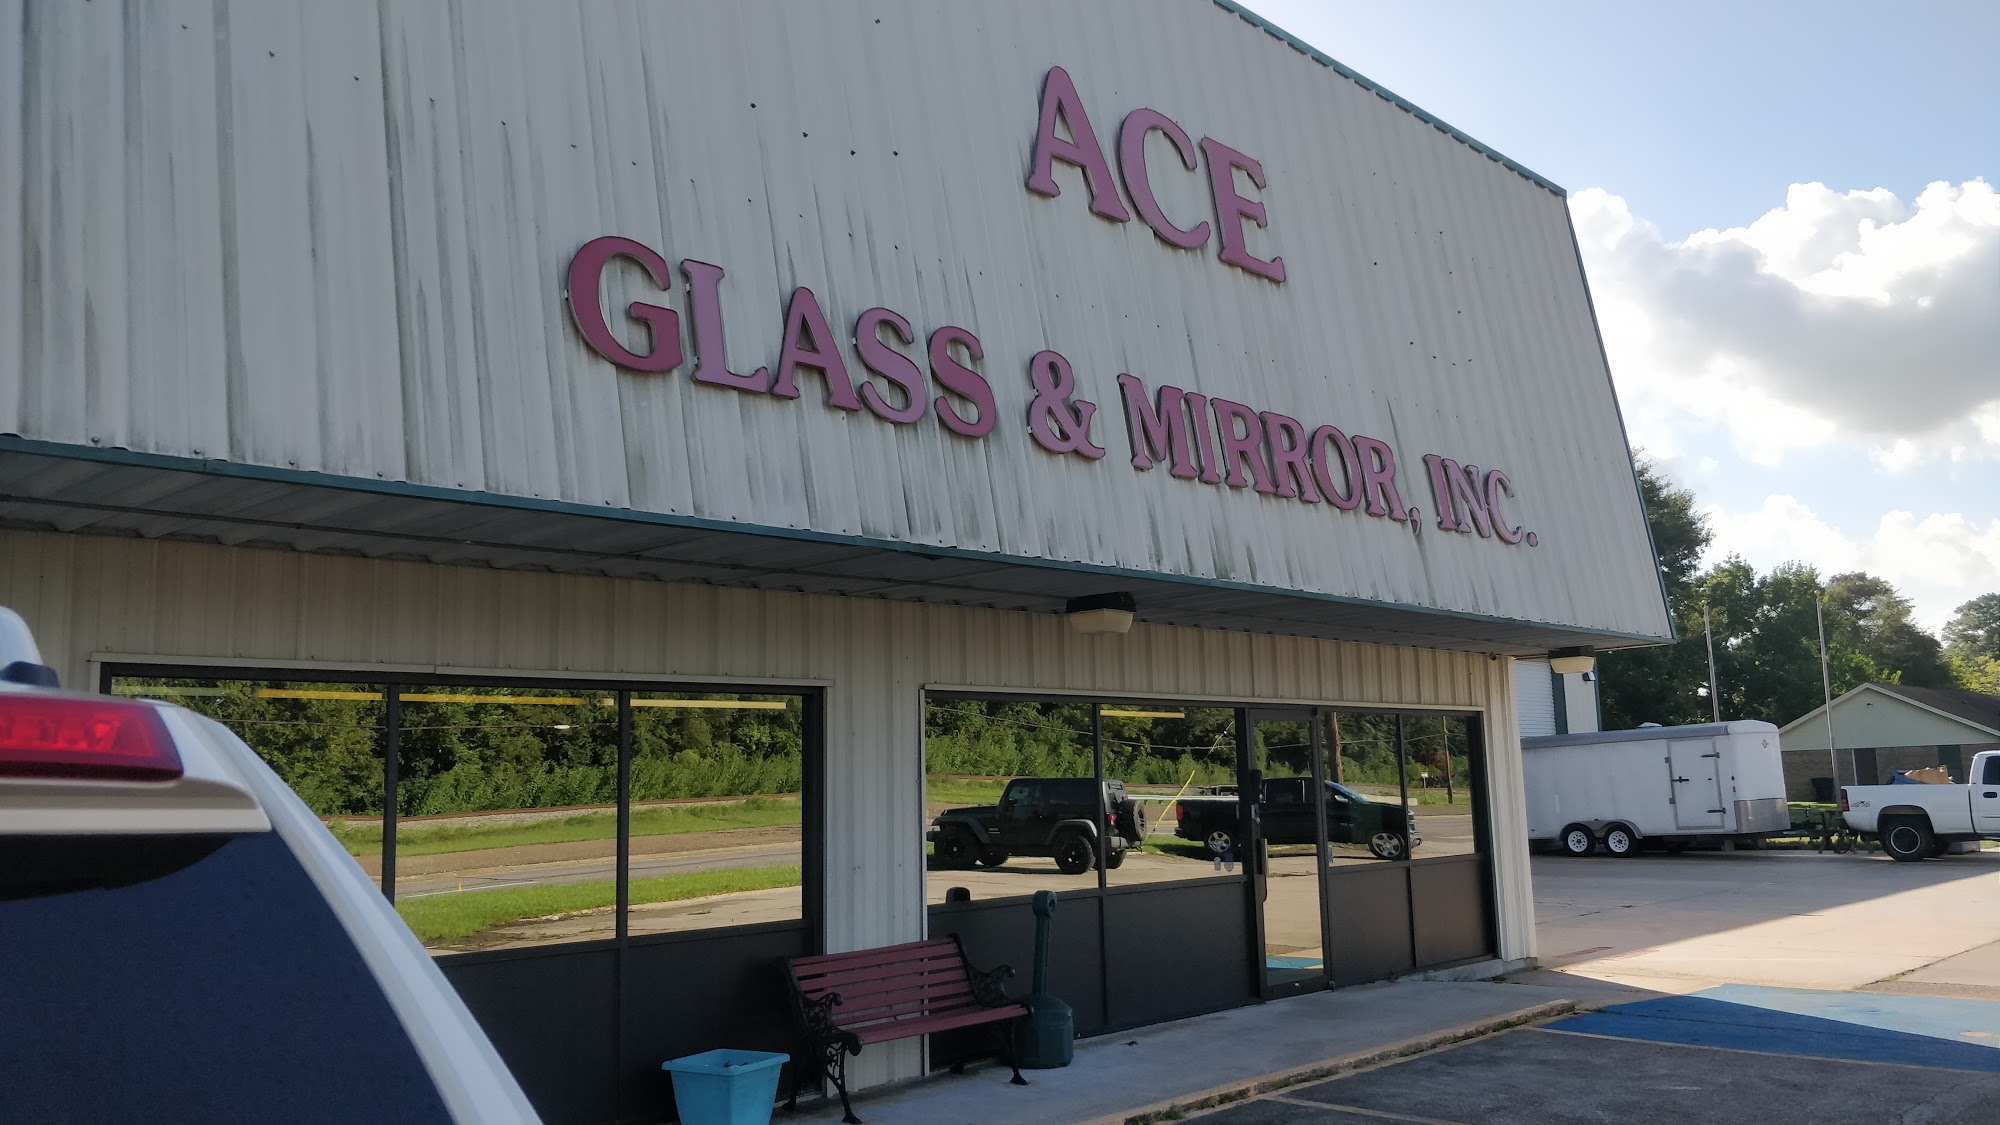 Ace Glass & Mirror